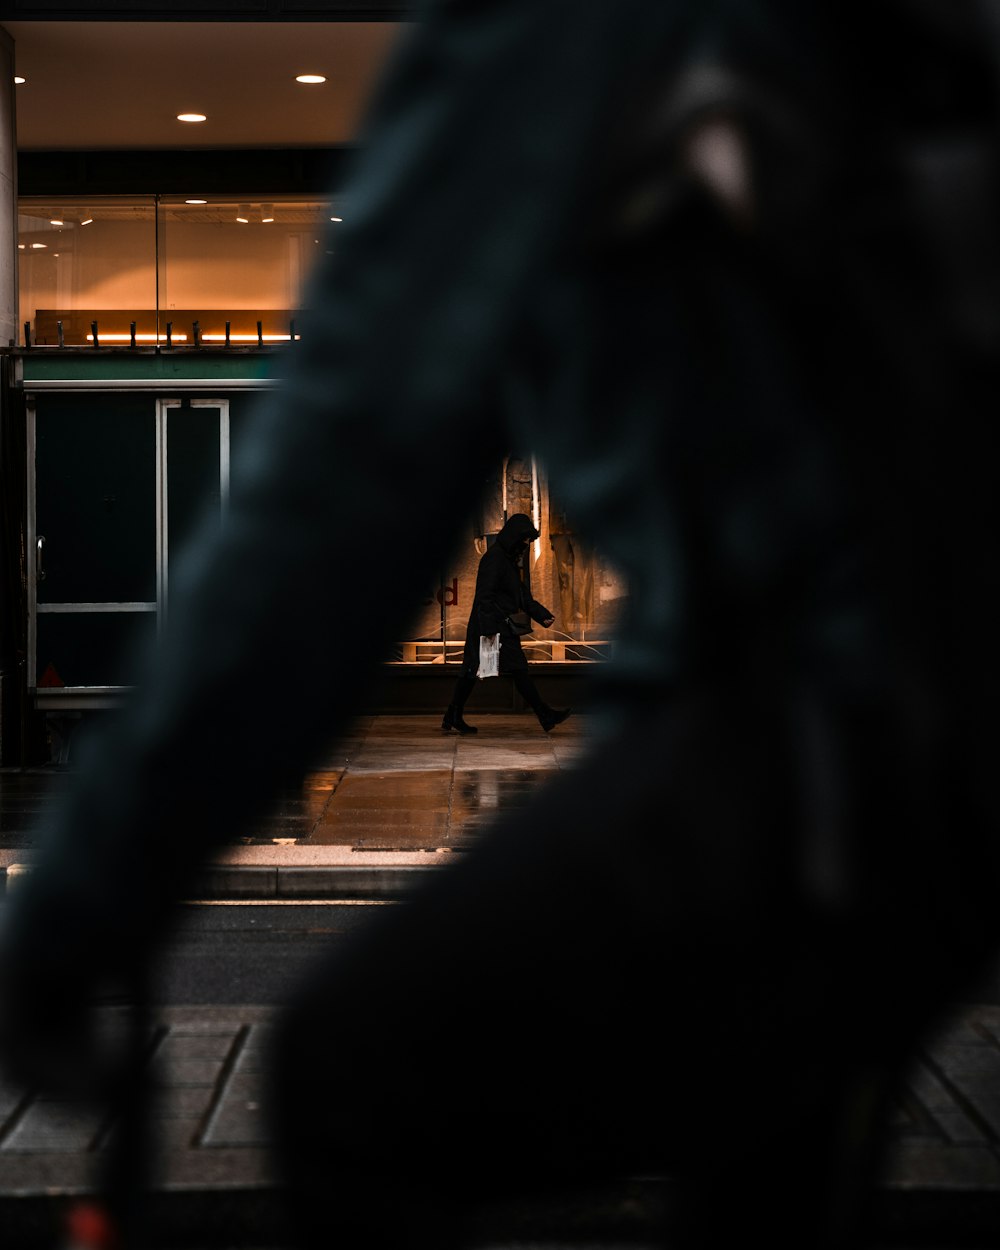 silhouette of people walking on sidewalk during night time